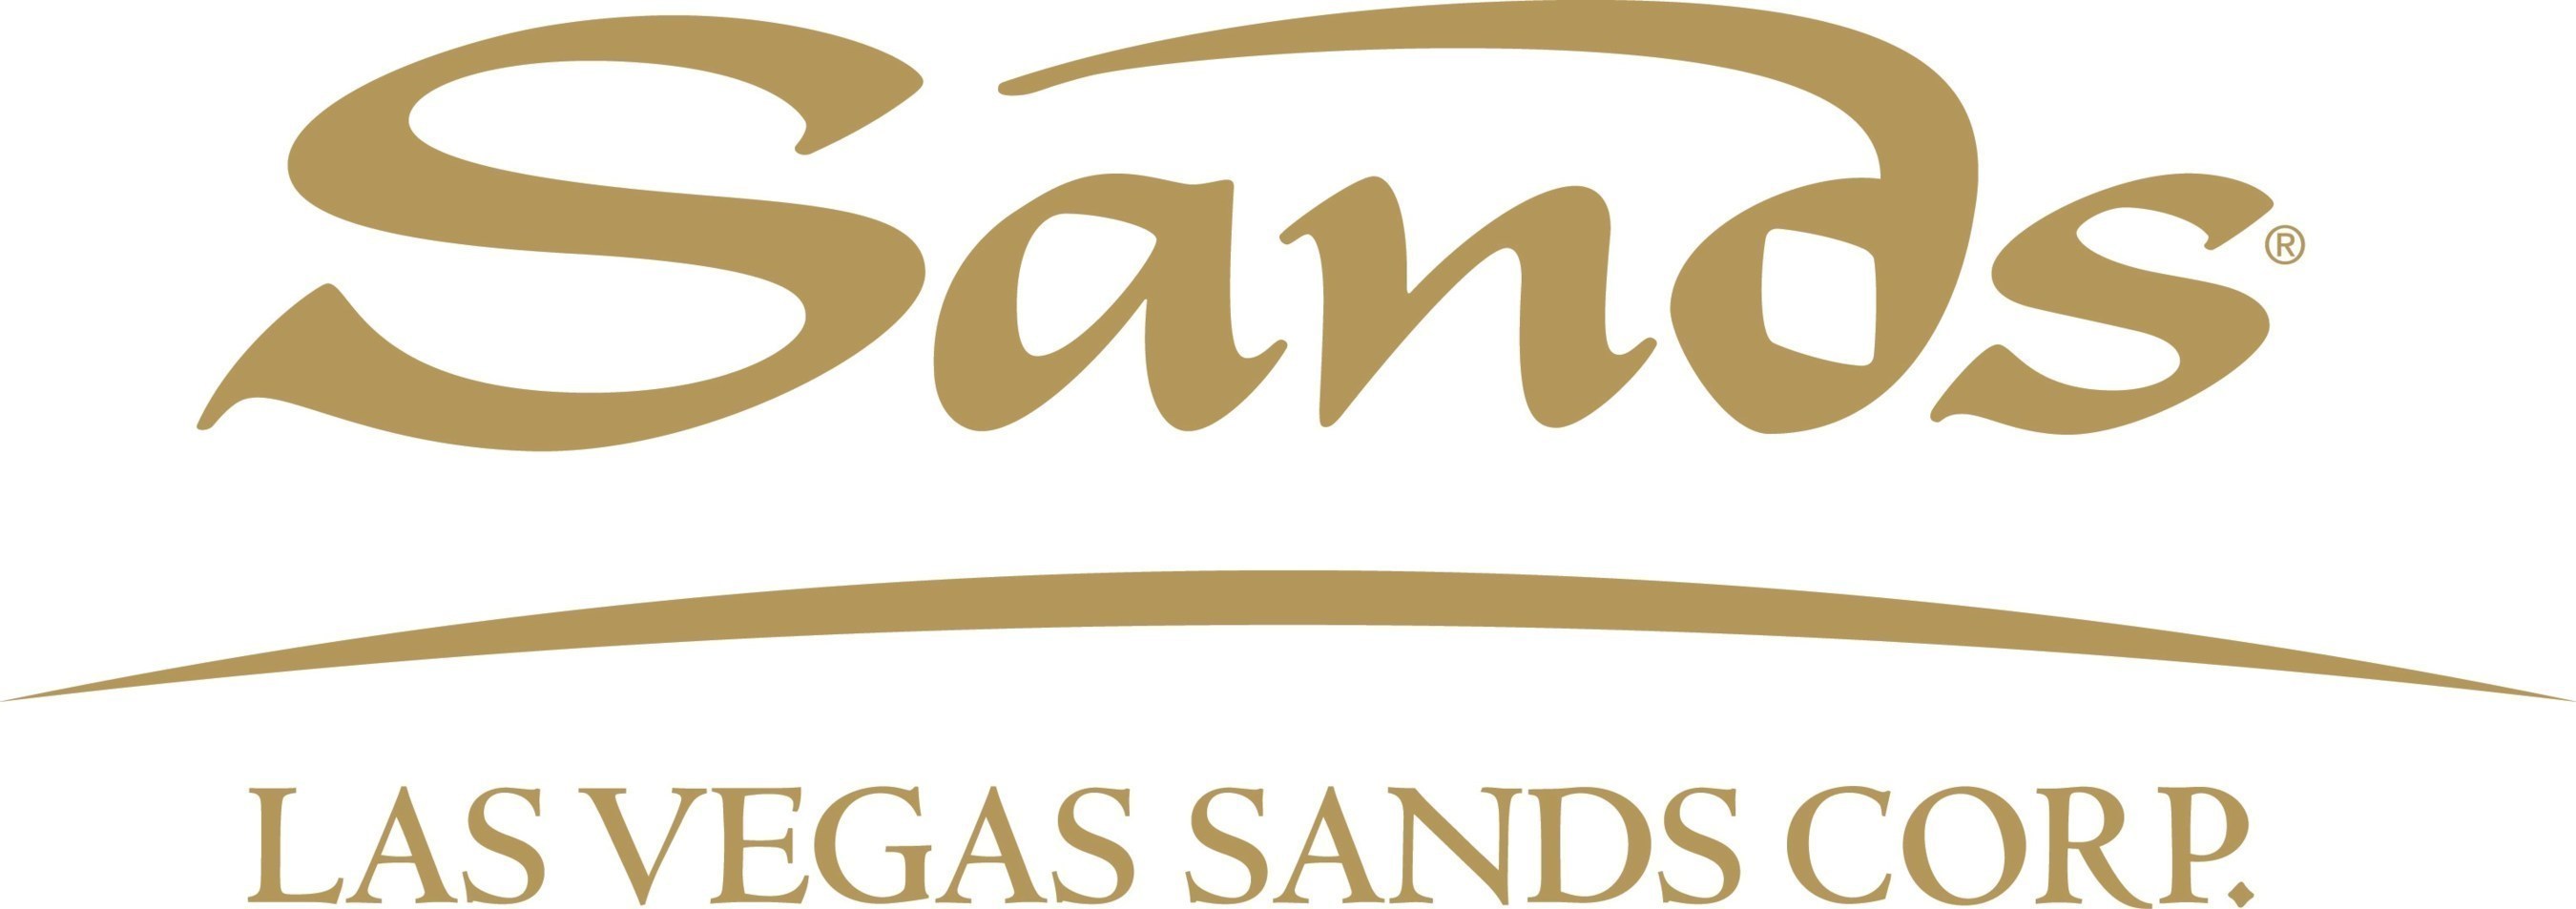 Las Vegas Sands Reaches Five-Year Global Sustainability Milestone